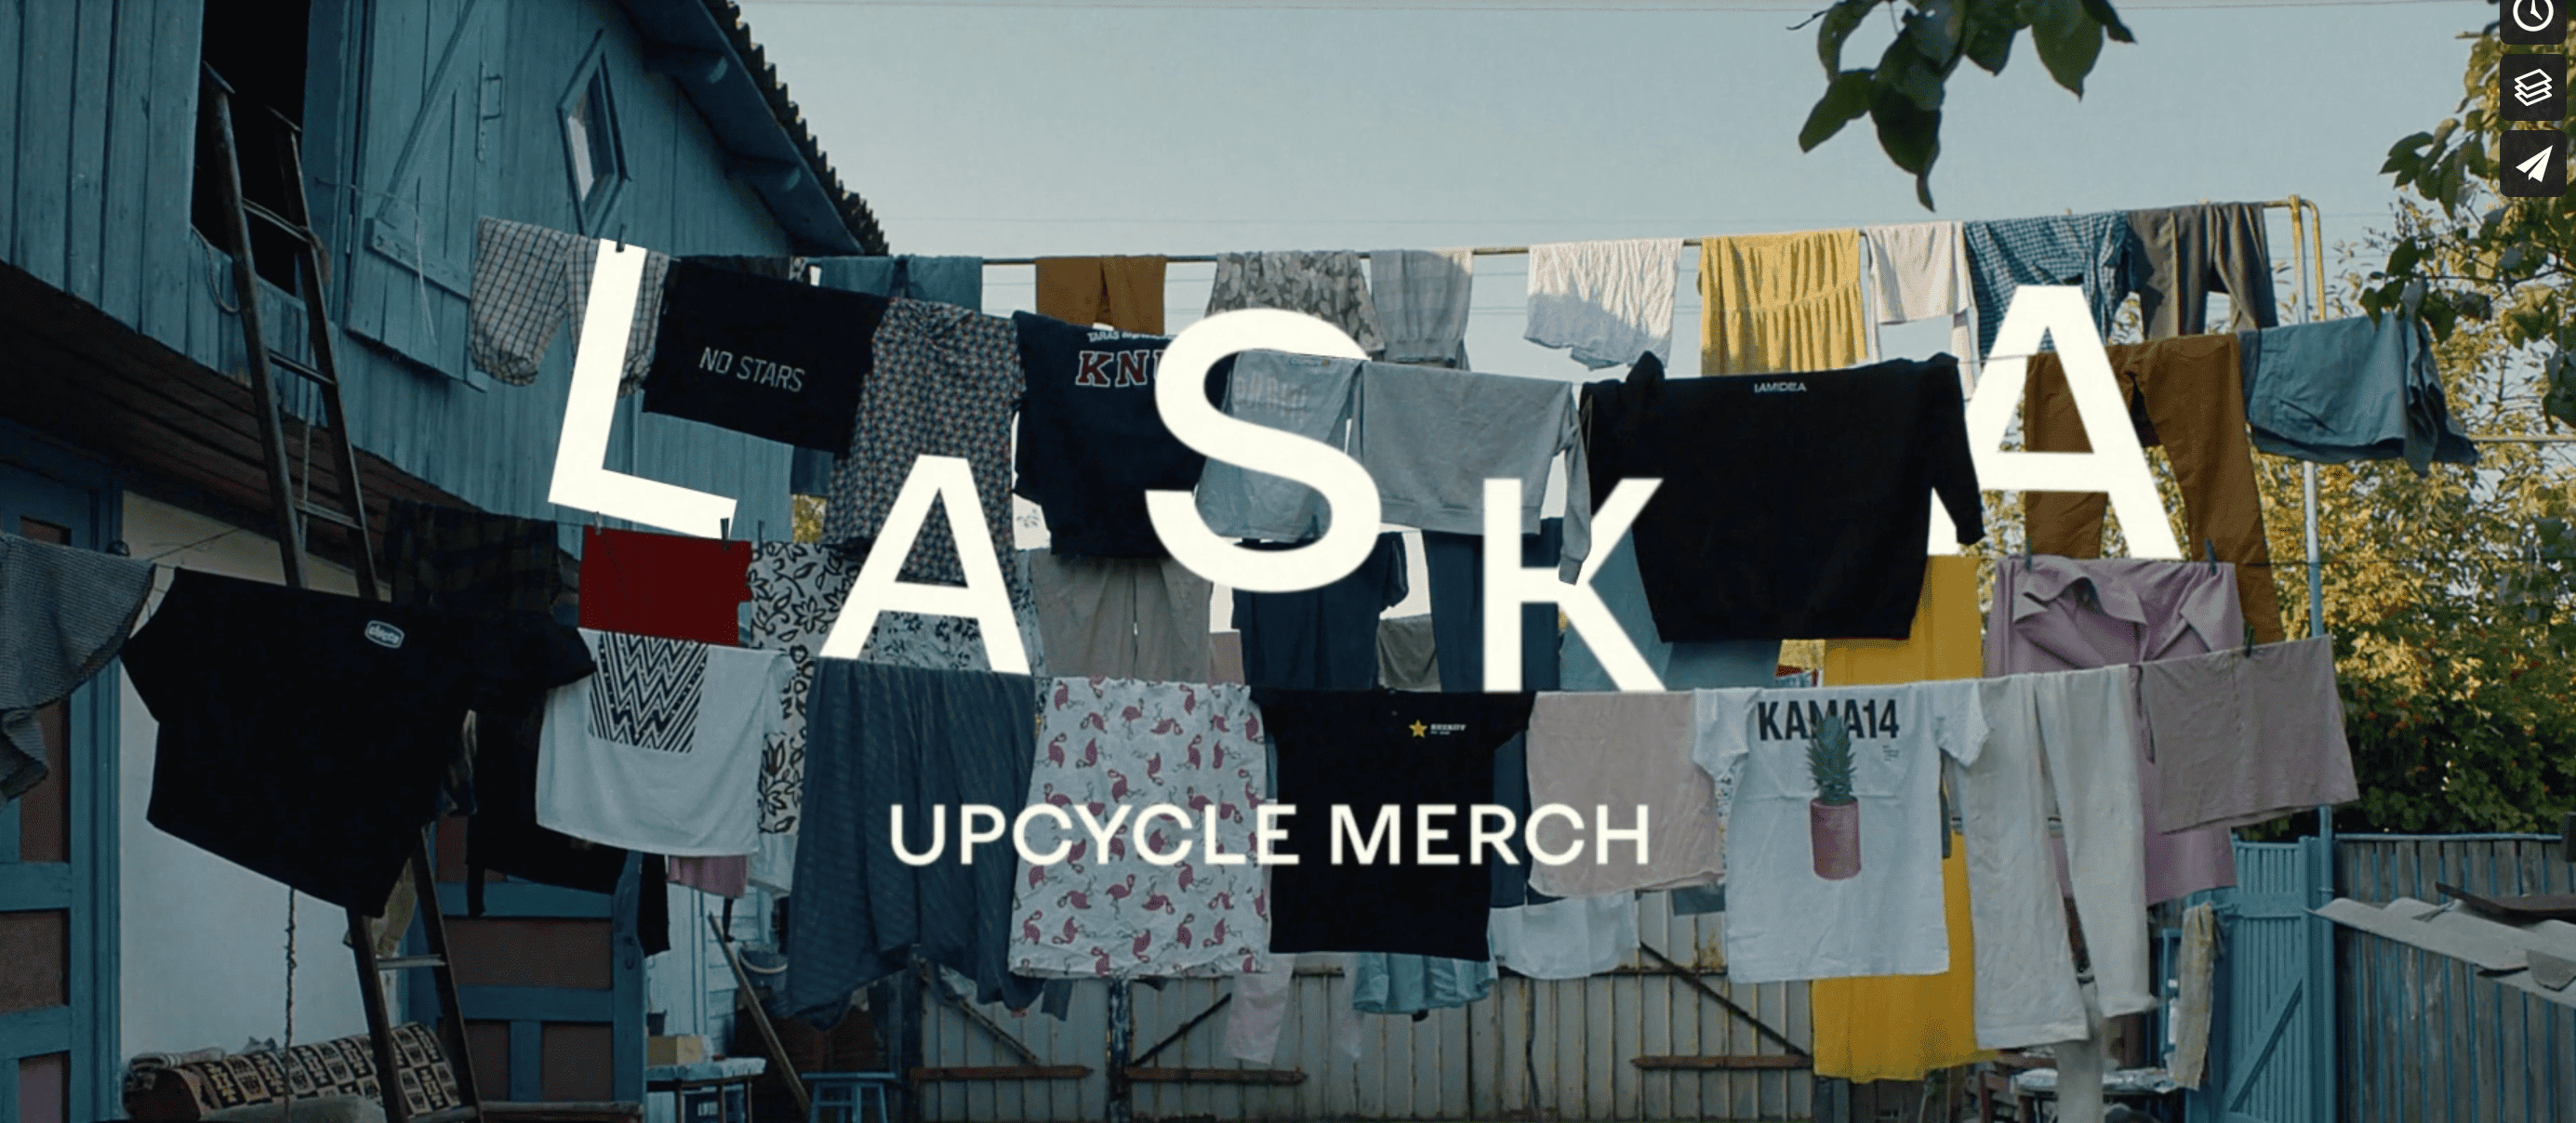 Laska Upcycle Merch 20: про що проєкт?